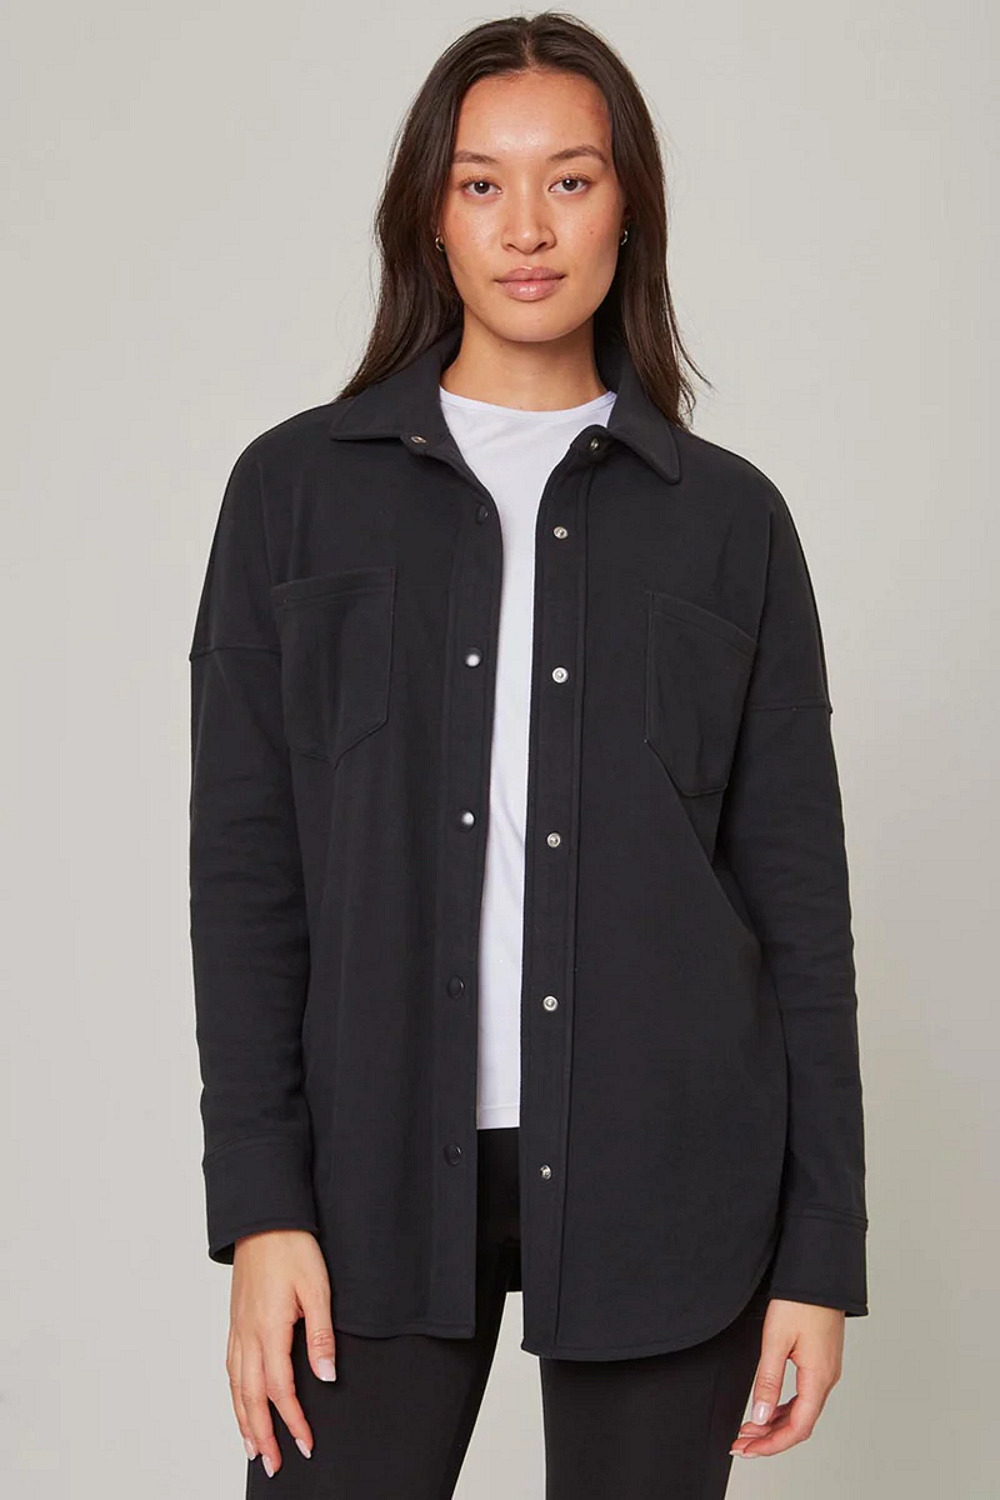 Mondetta Women\'s Cozy Warm Fleece Shirt Jacket